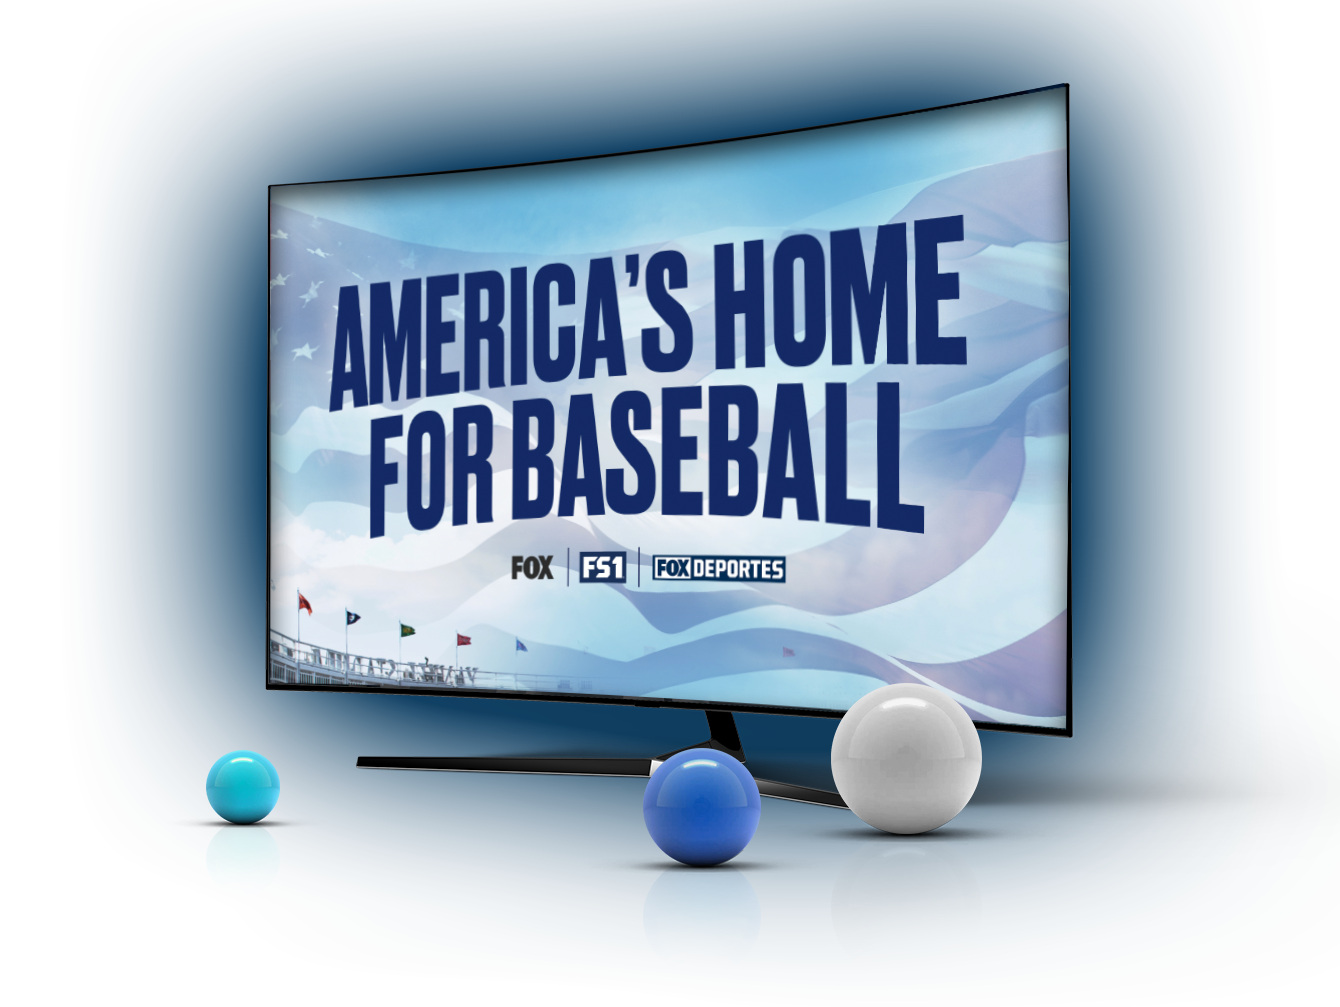 America's Home for Baseball - Fox, FS1, Fox Deportes